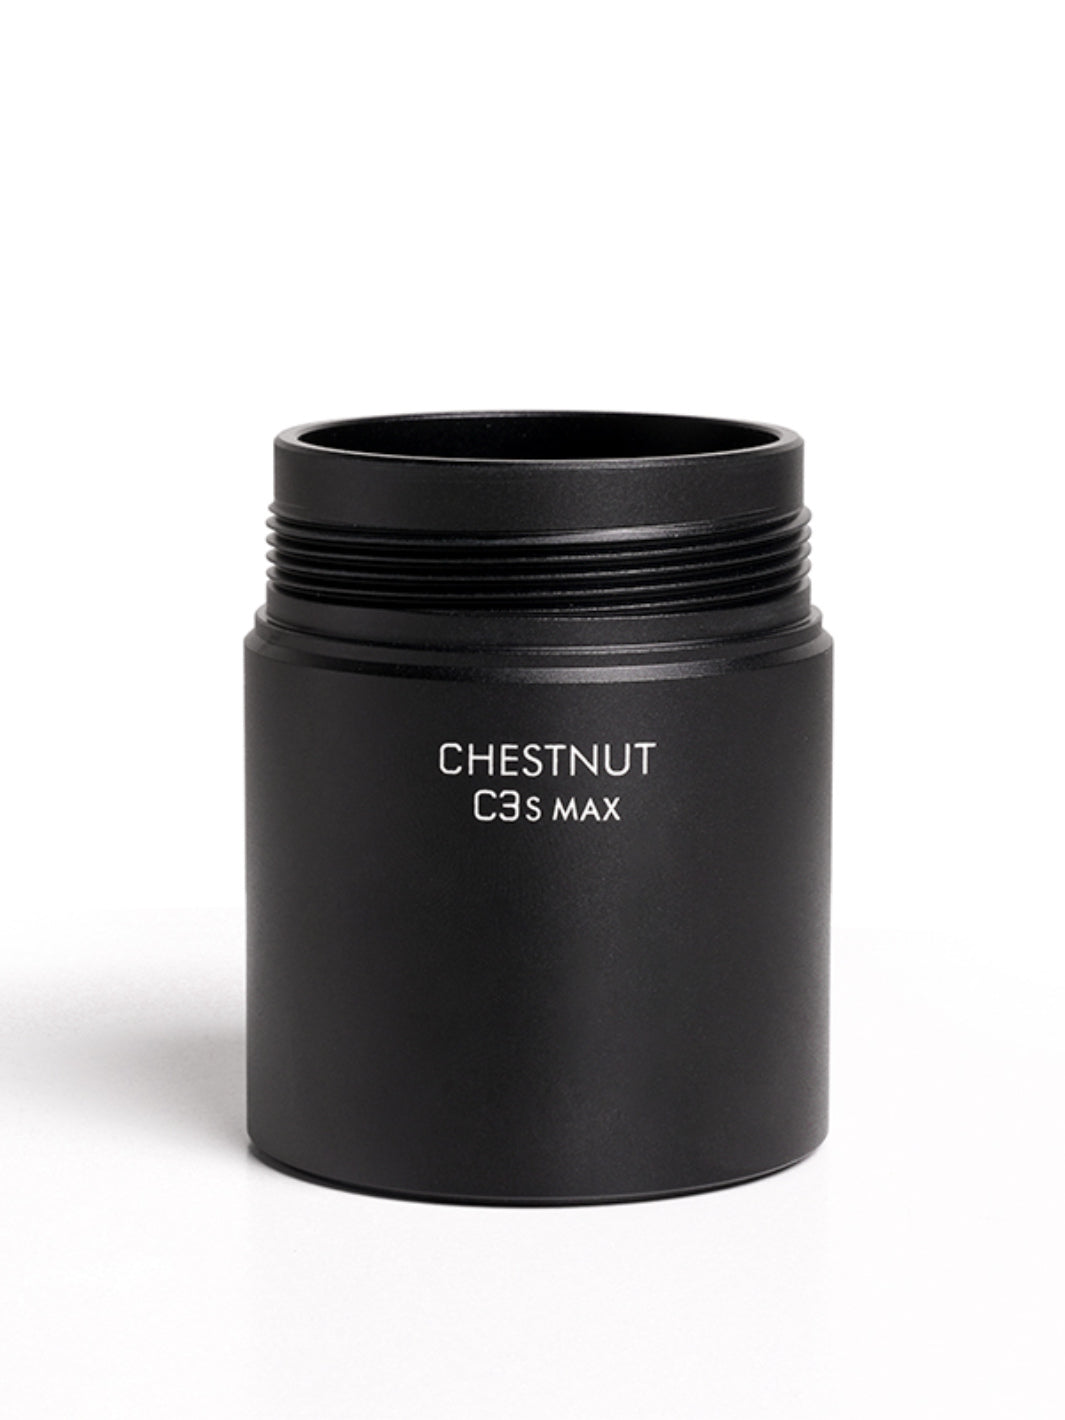 TIMEMORE Chestnut C3s MAX Grinder